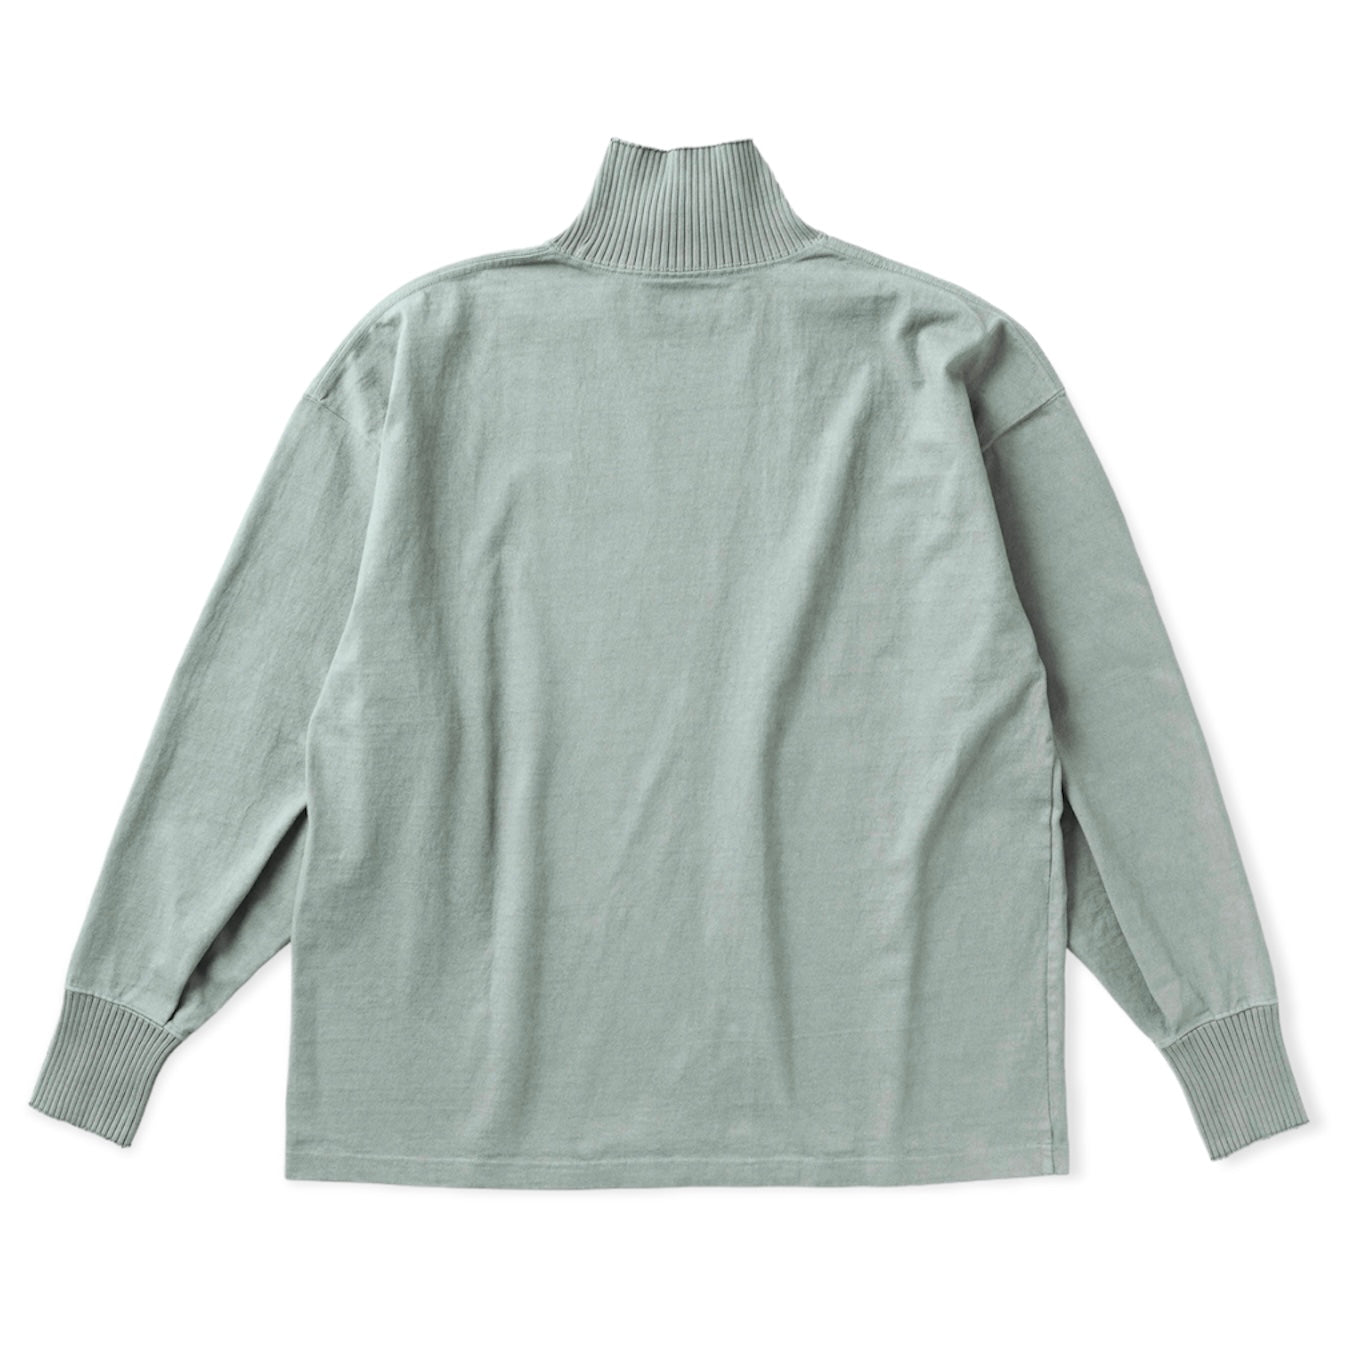 Turtle Neck Long Sleeve T Shirt / Gray(タートルネック ロングスリーブ ティーシャツ/グレー)